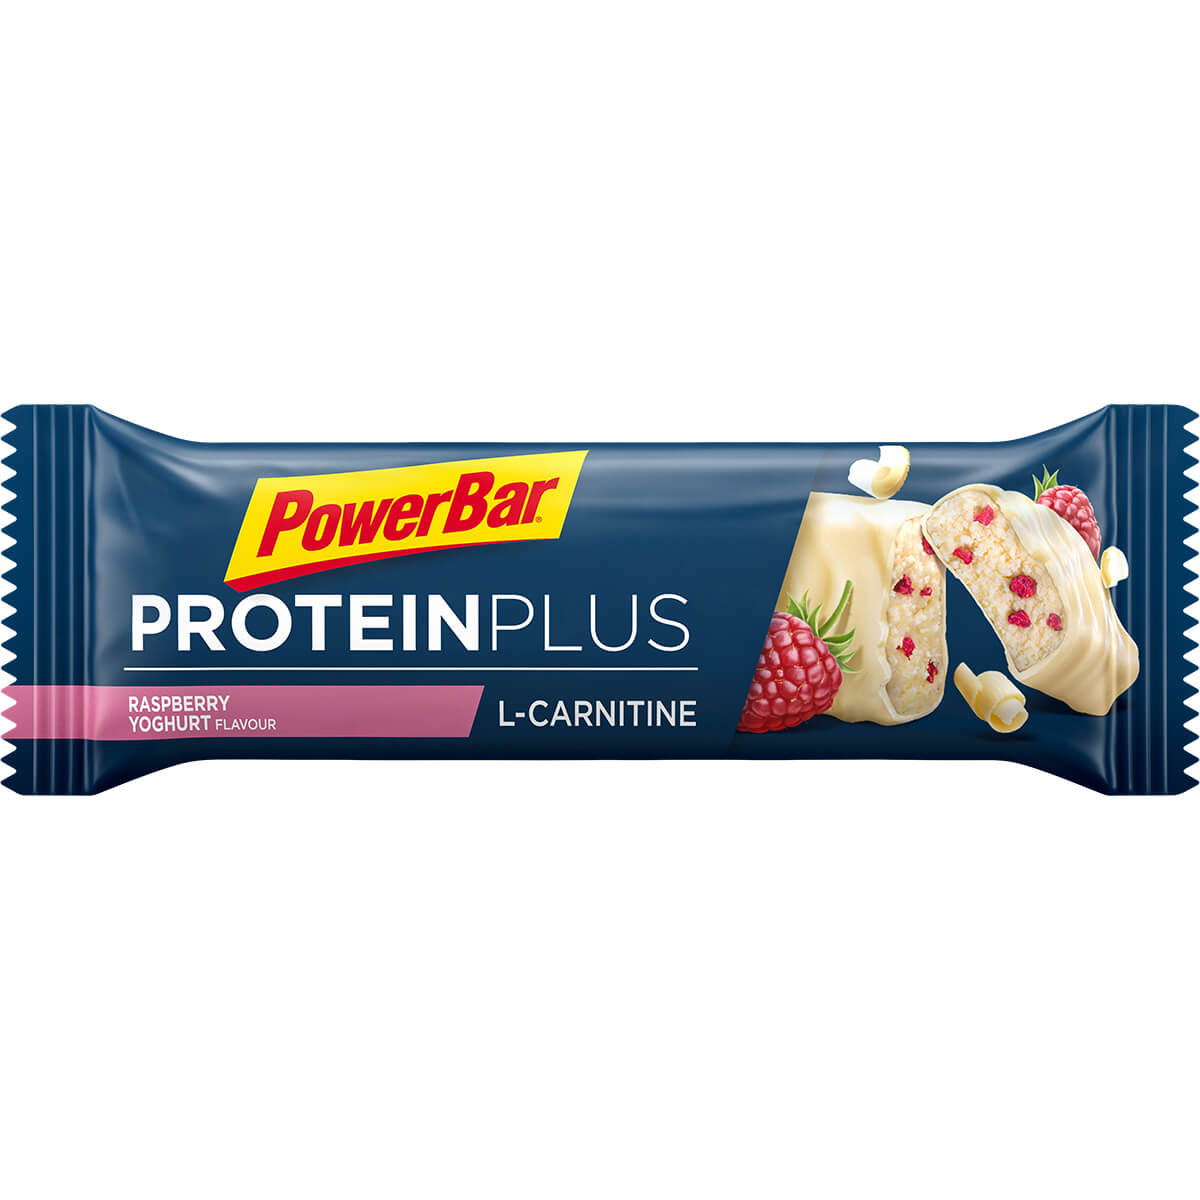 Protein Plus + L-Carnitine